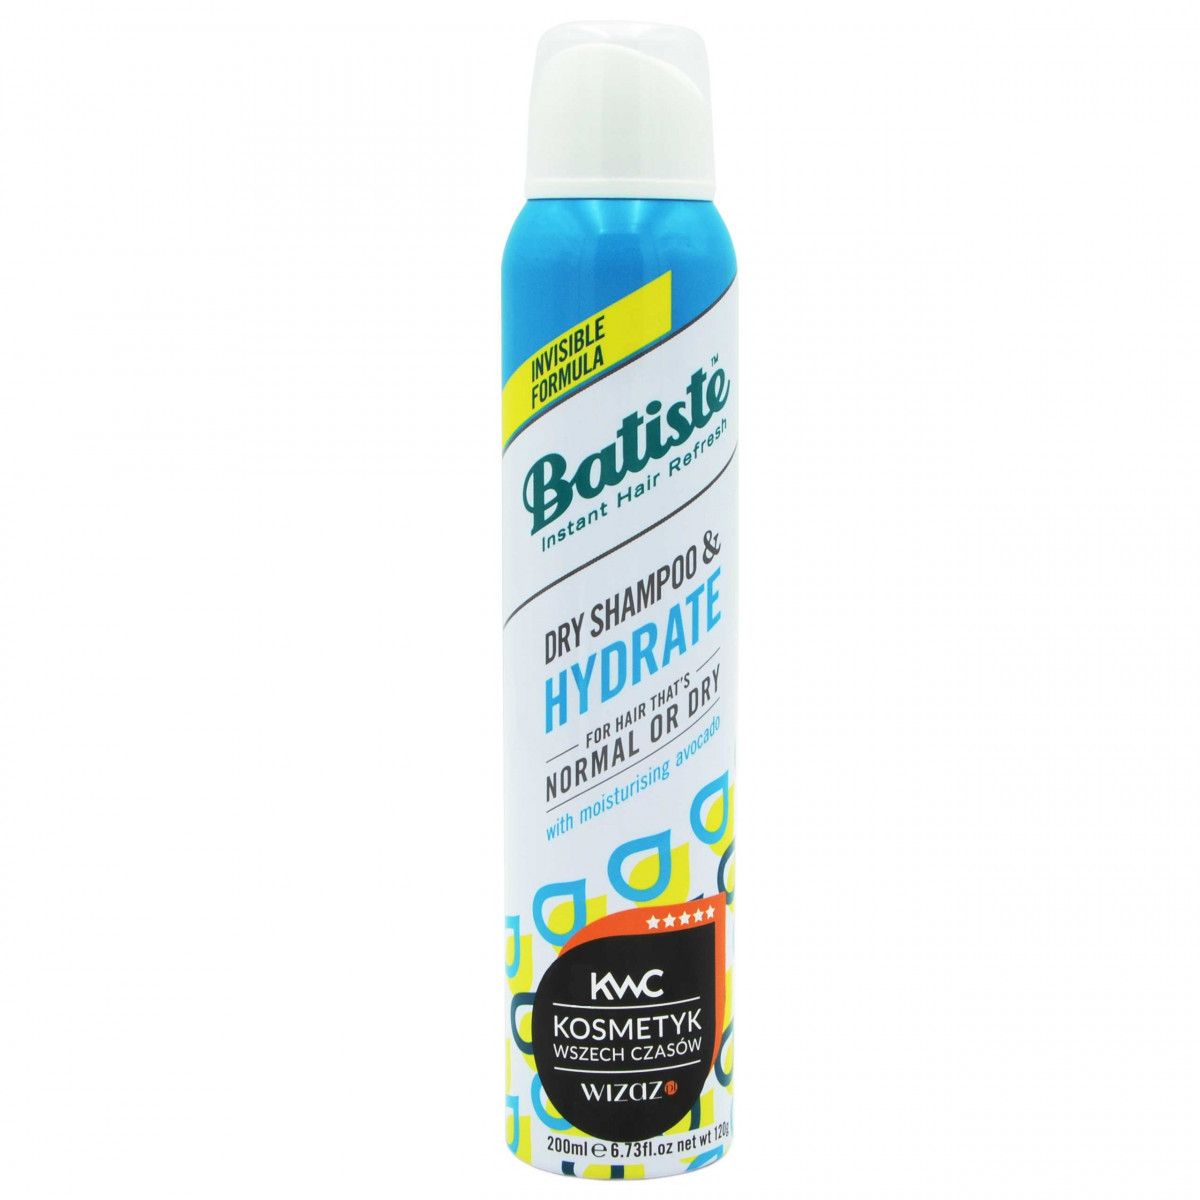 batiste dry shampoo blush suchy szampon